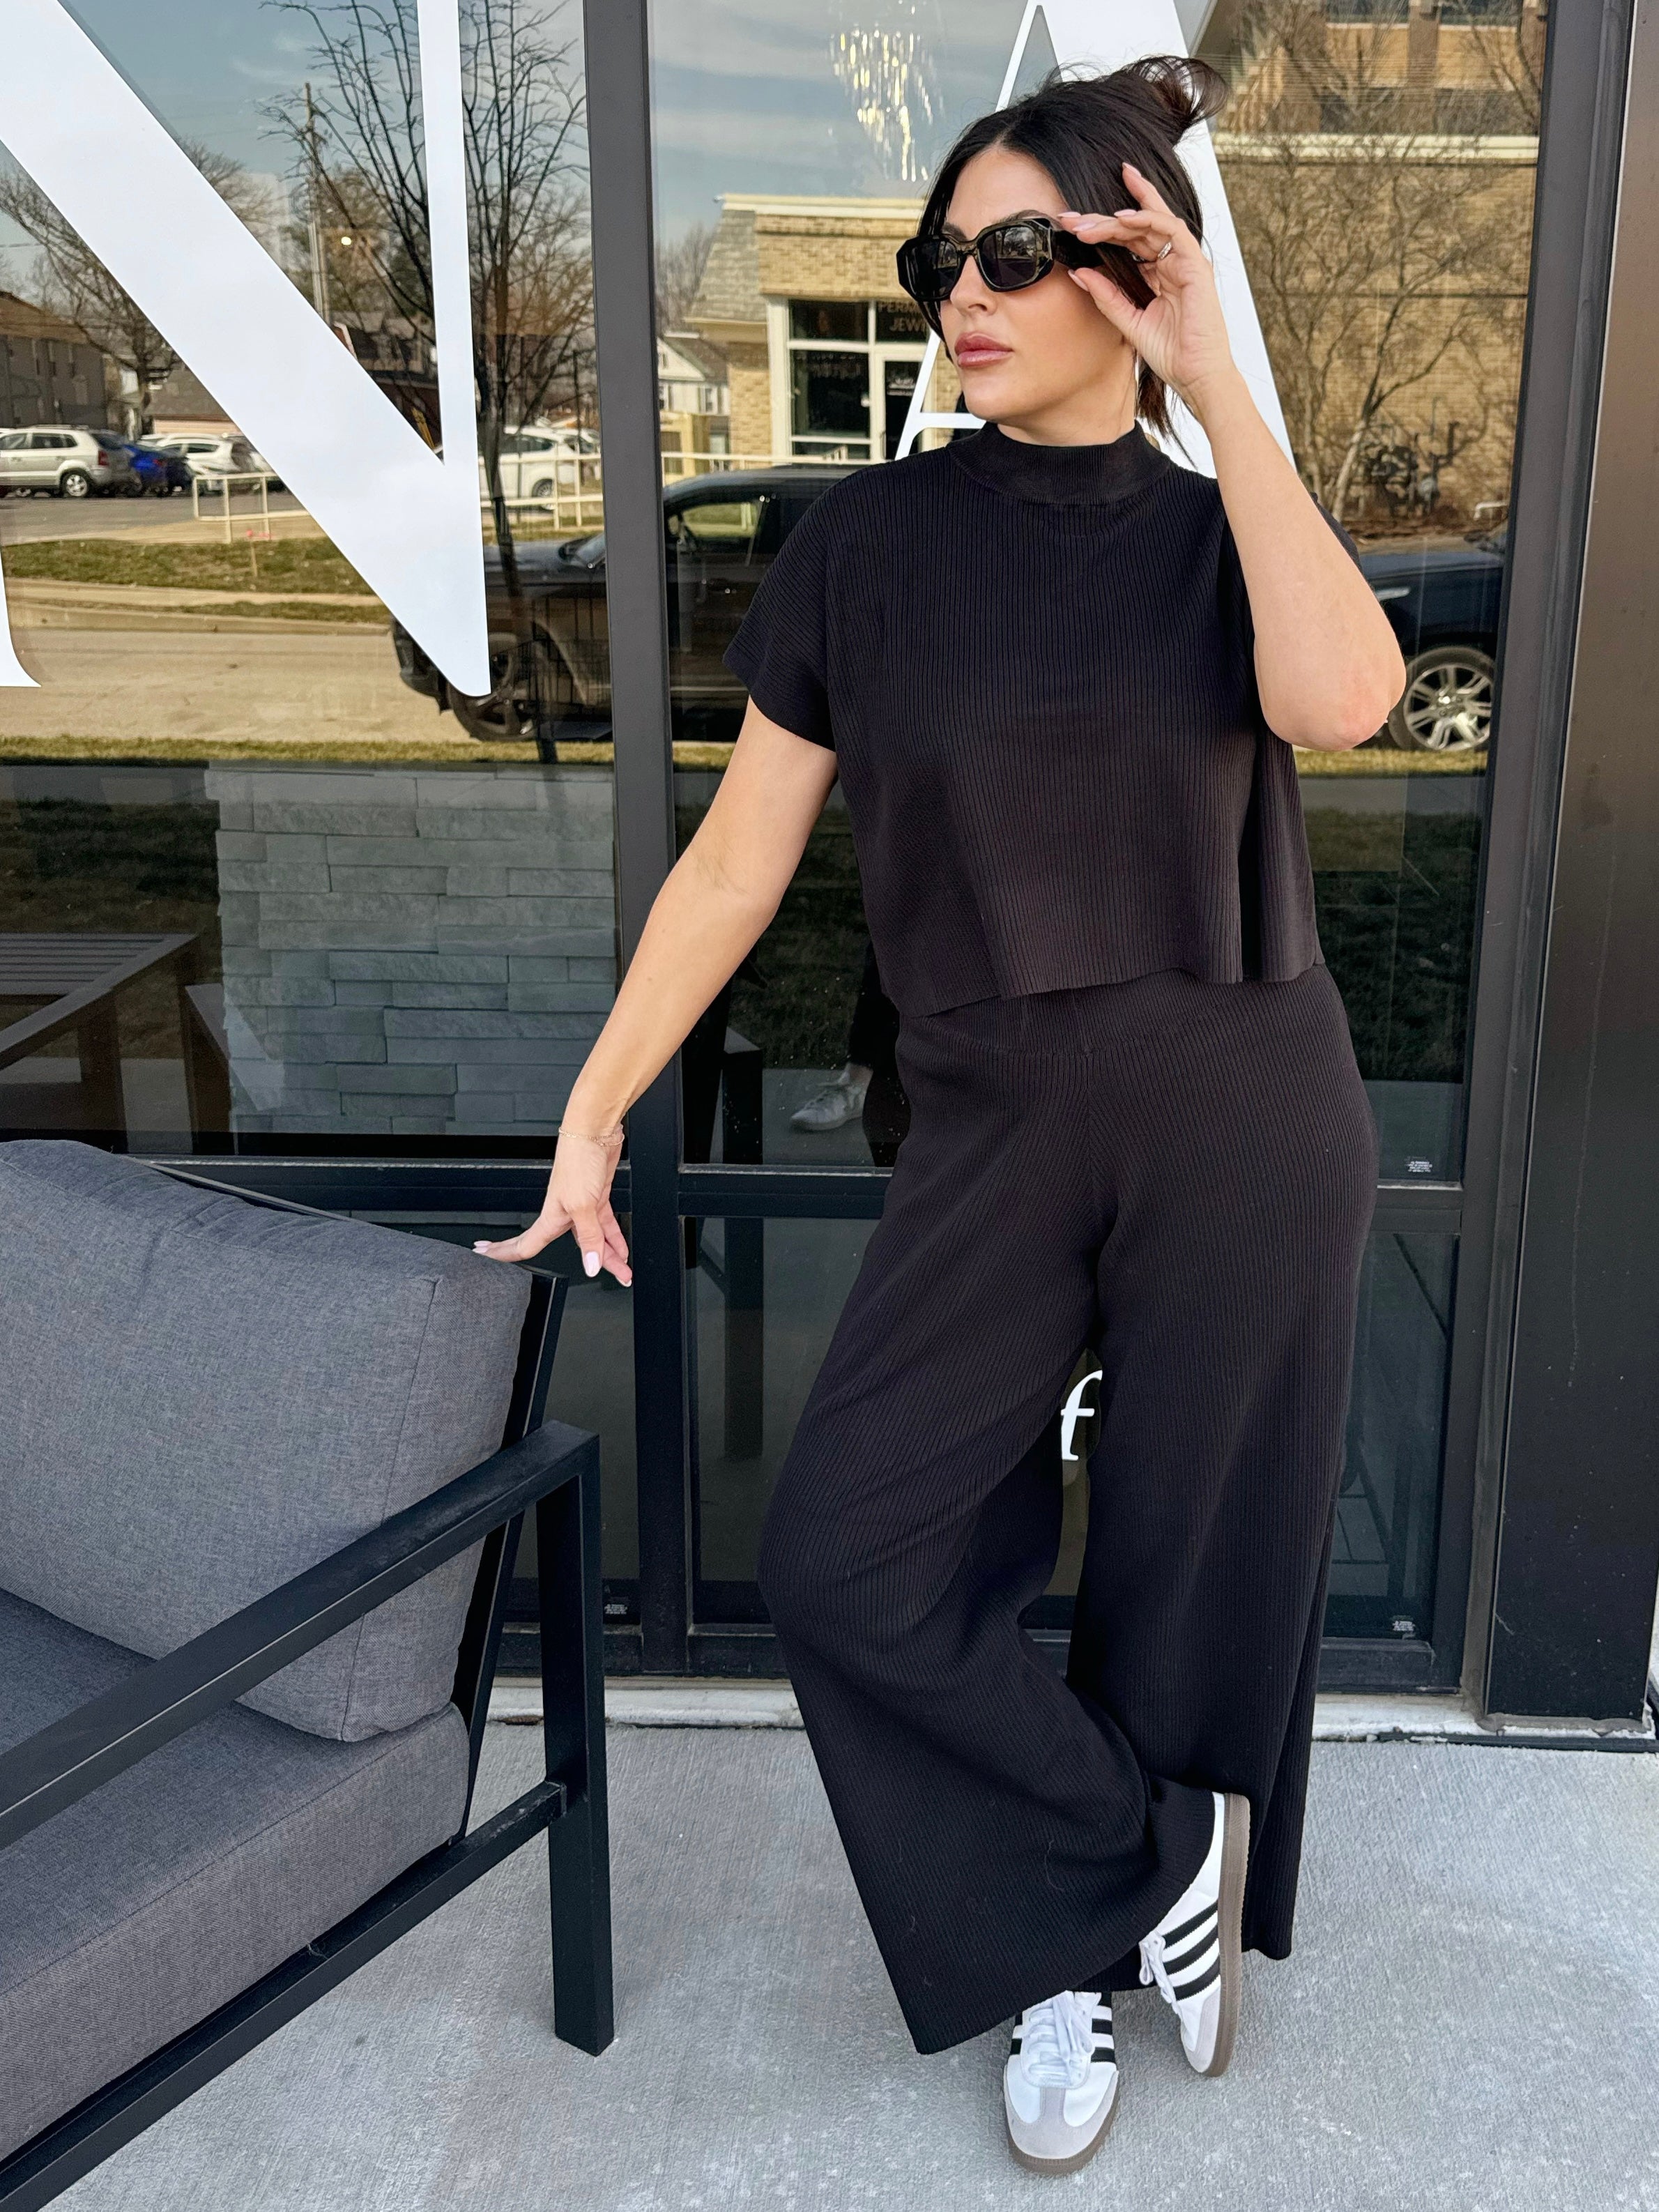 girl wearing sunglasses wearing black knit top and wide leg pants set 